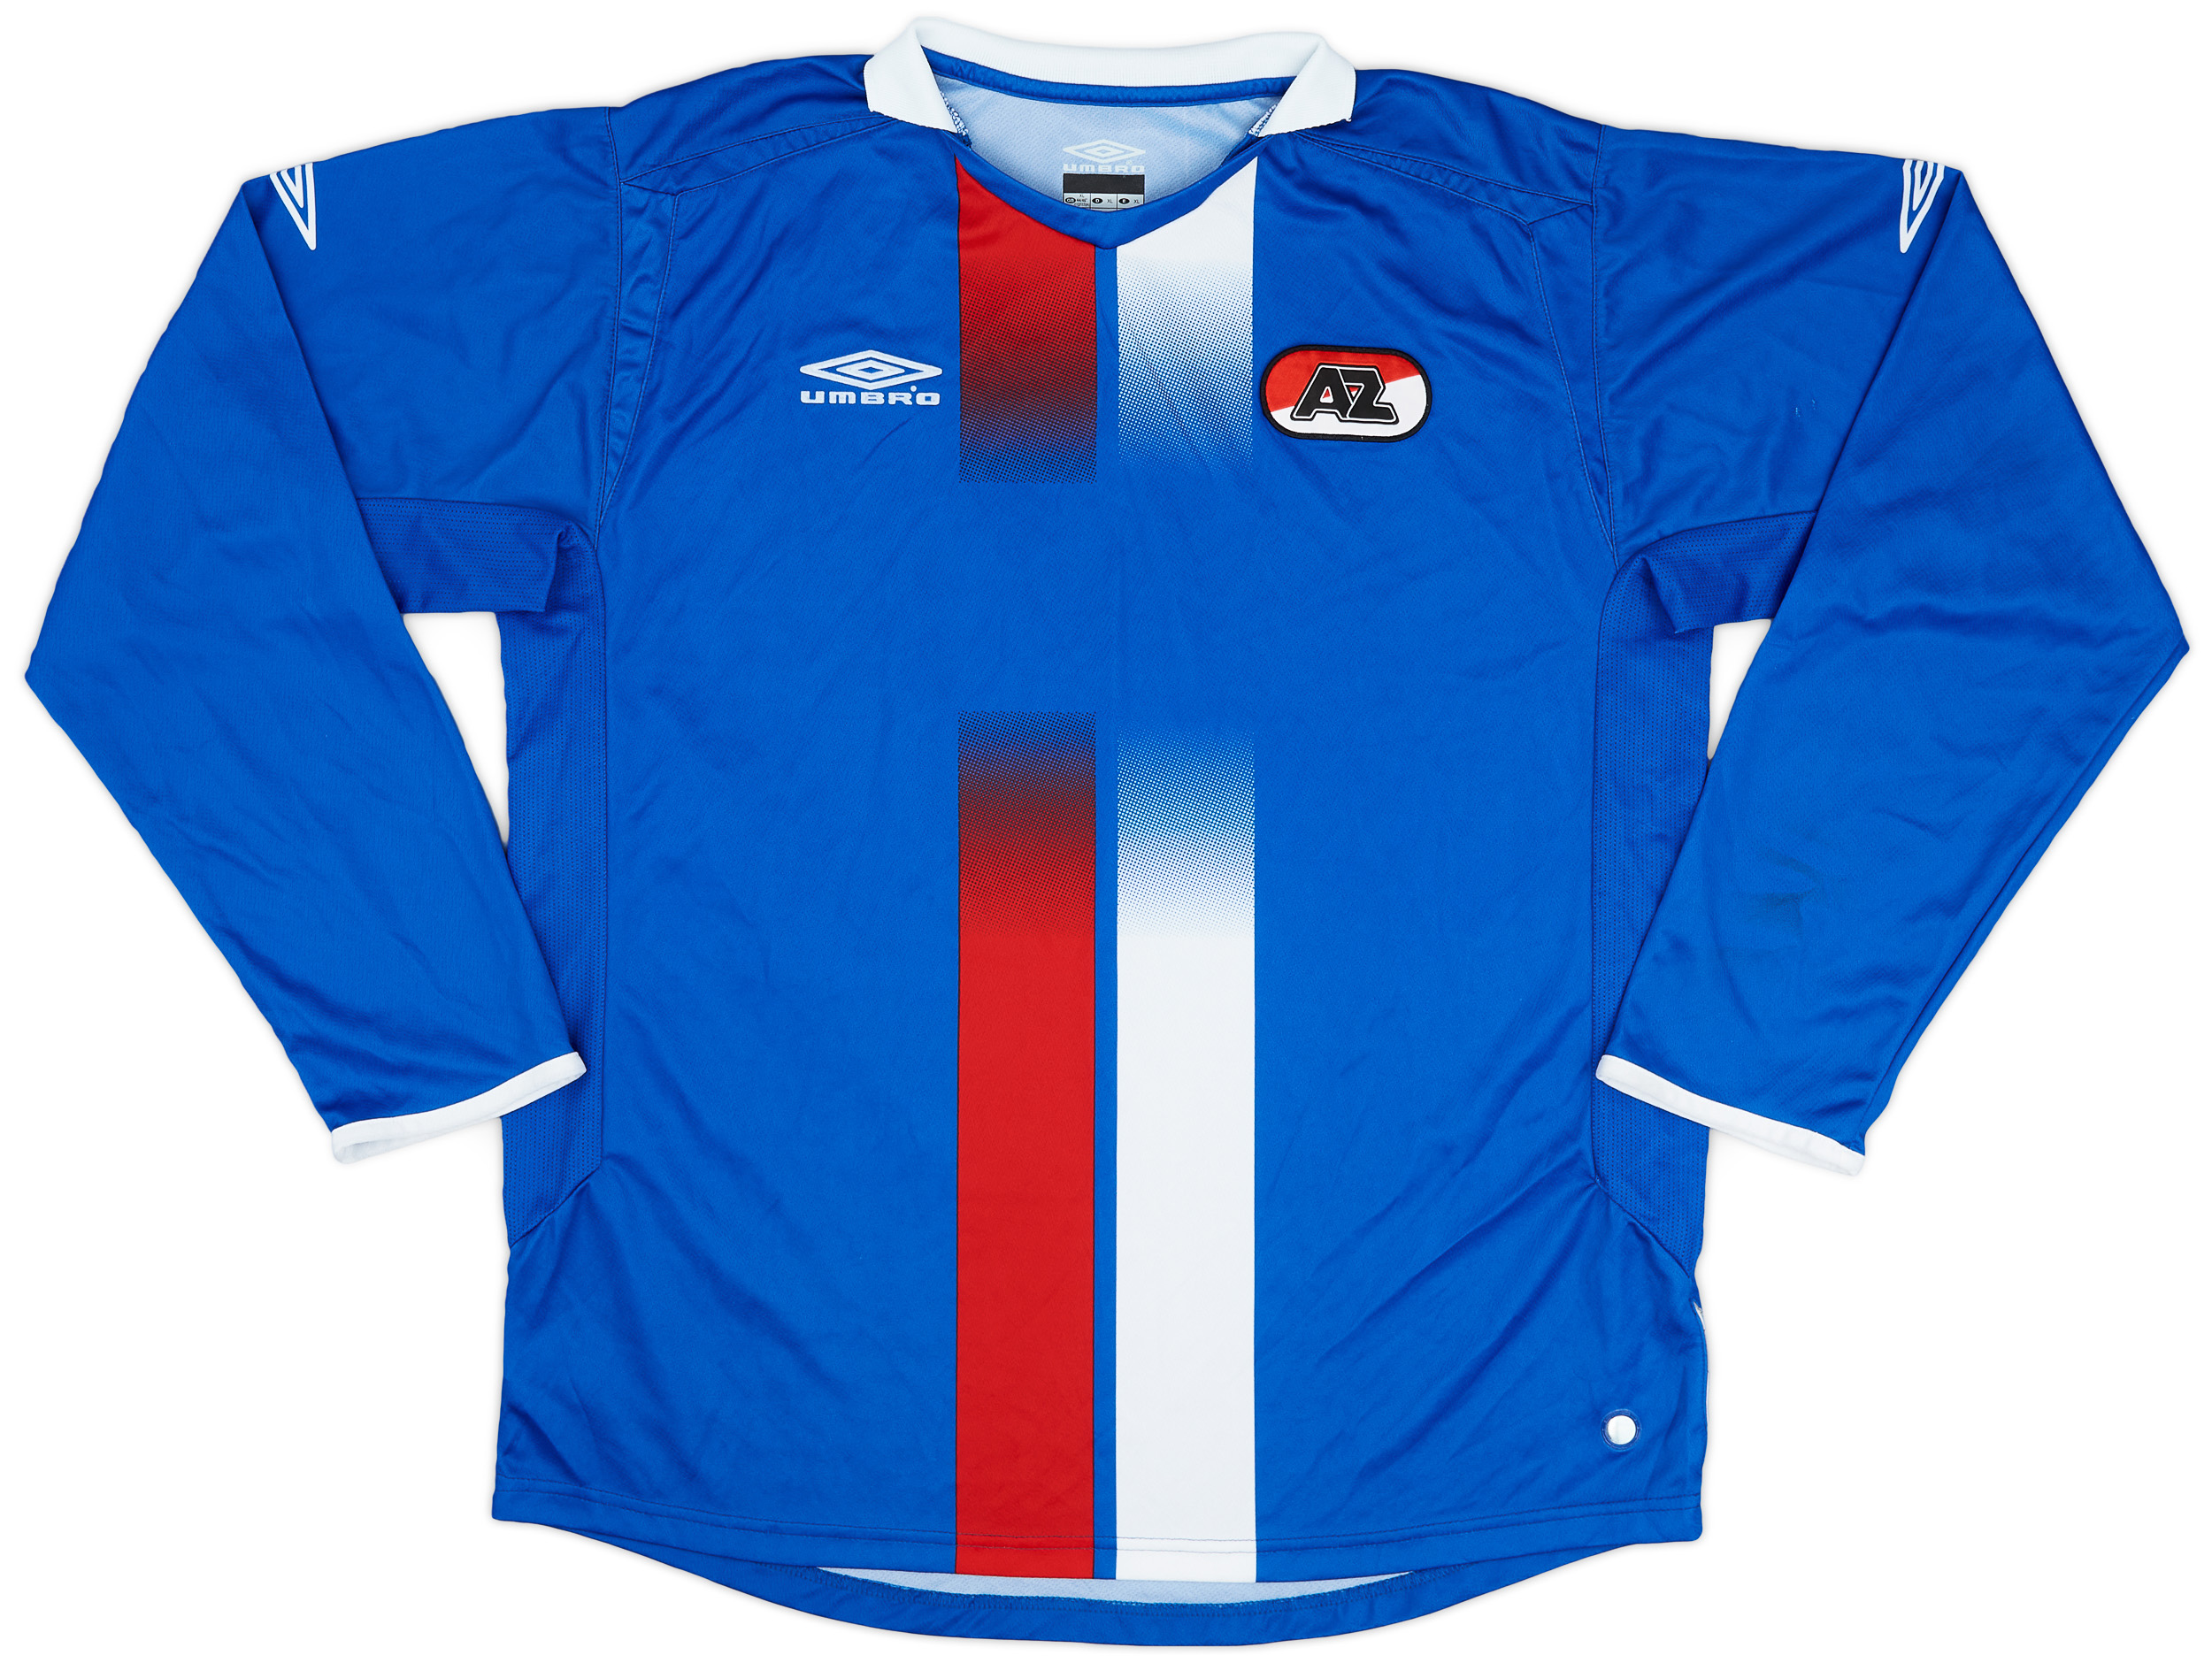 2005-06 AZ Alkmaar Away Shirt - 9/10 - ()